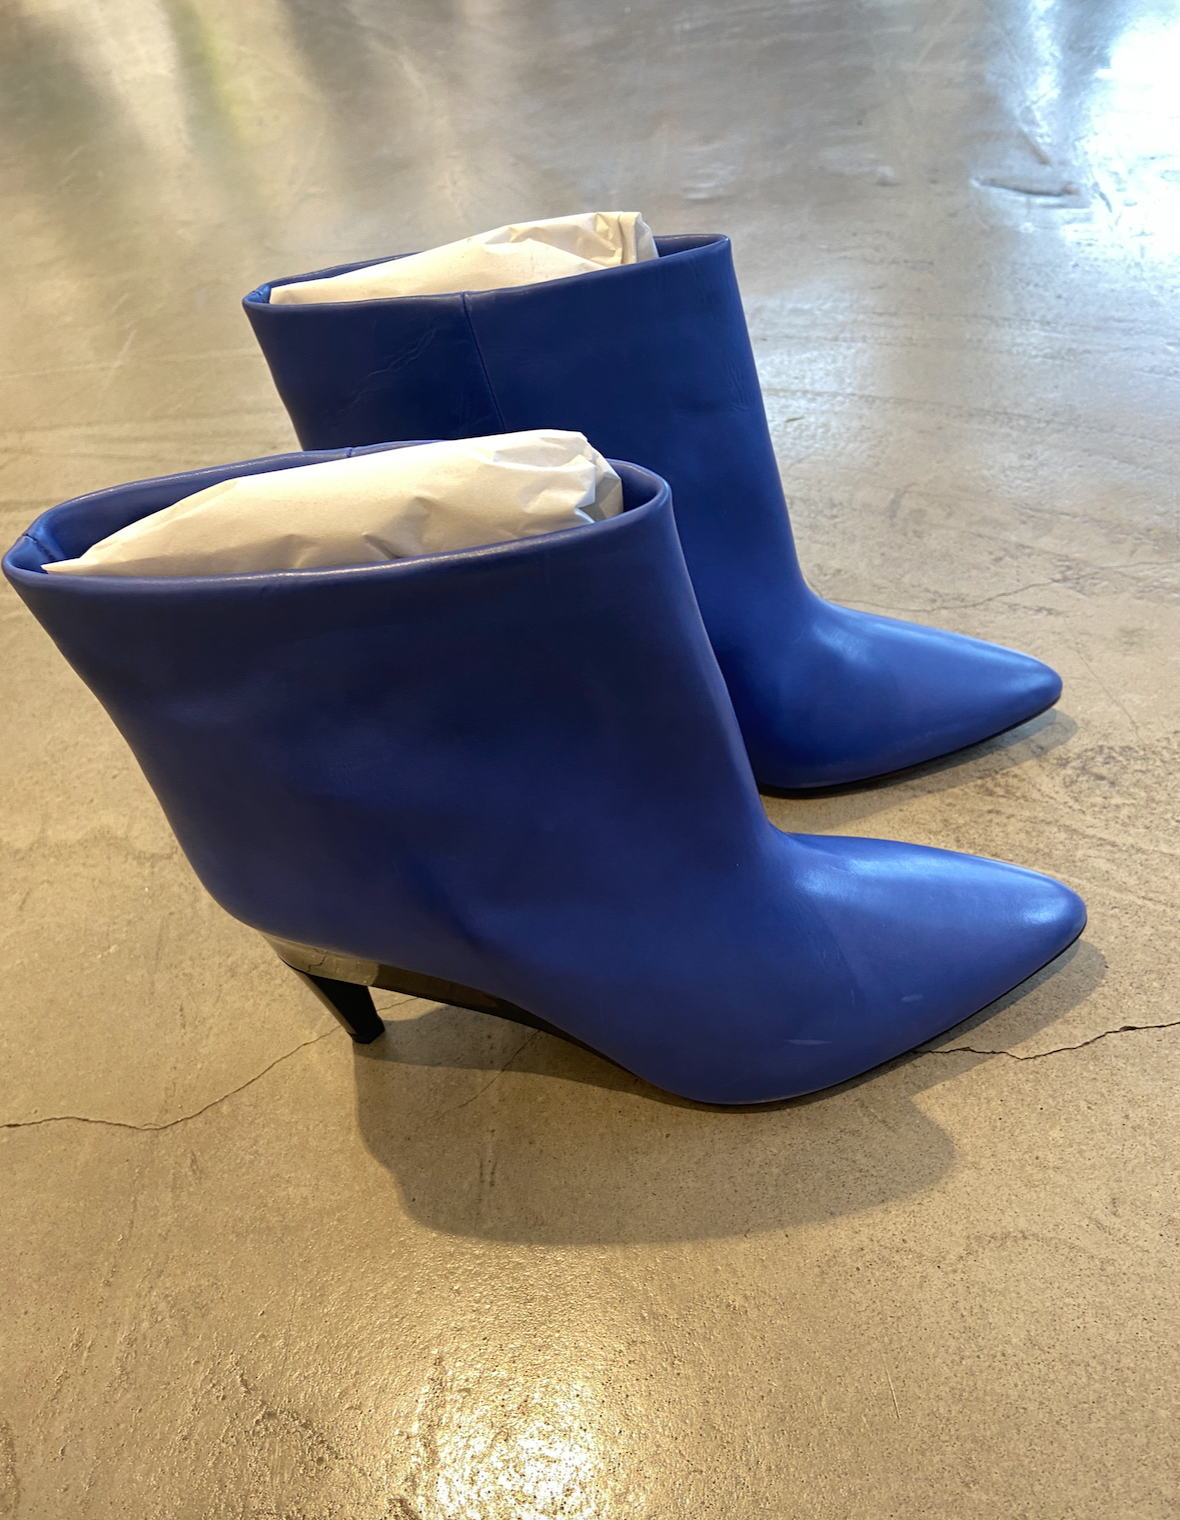 Dylvee boots, blue